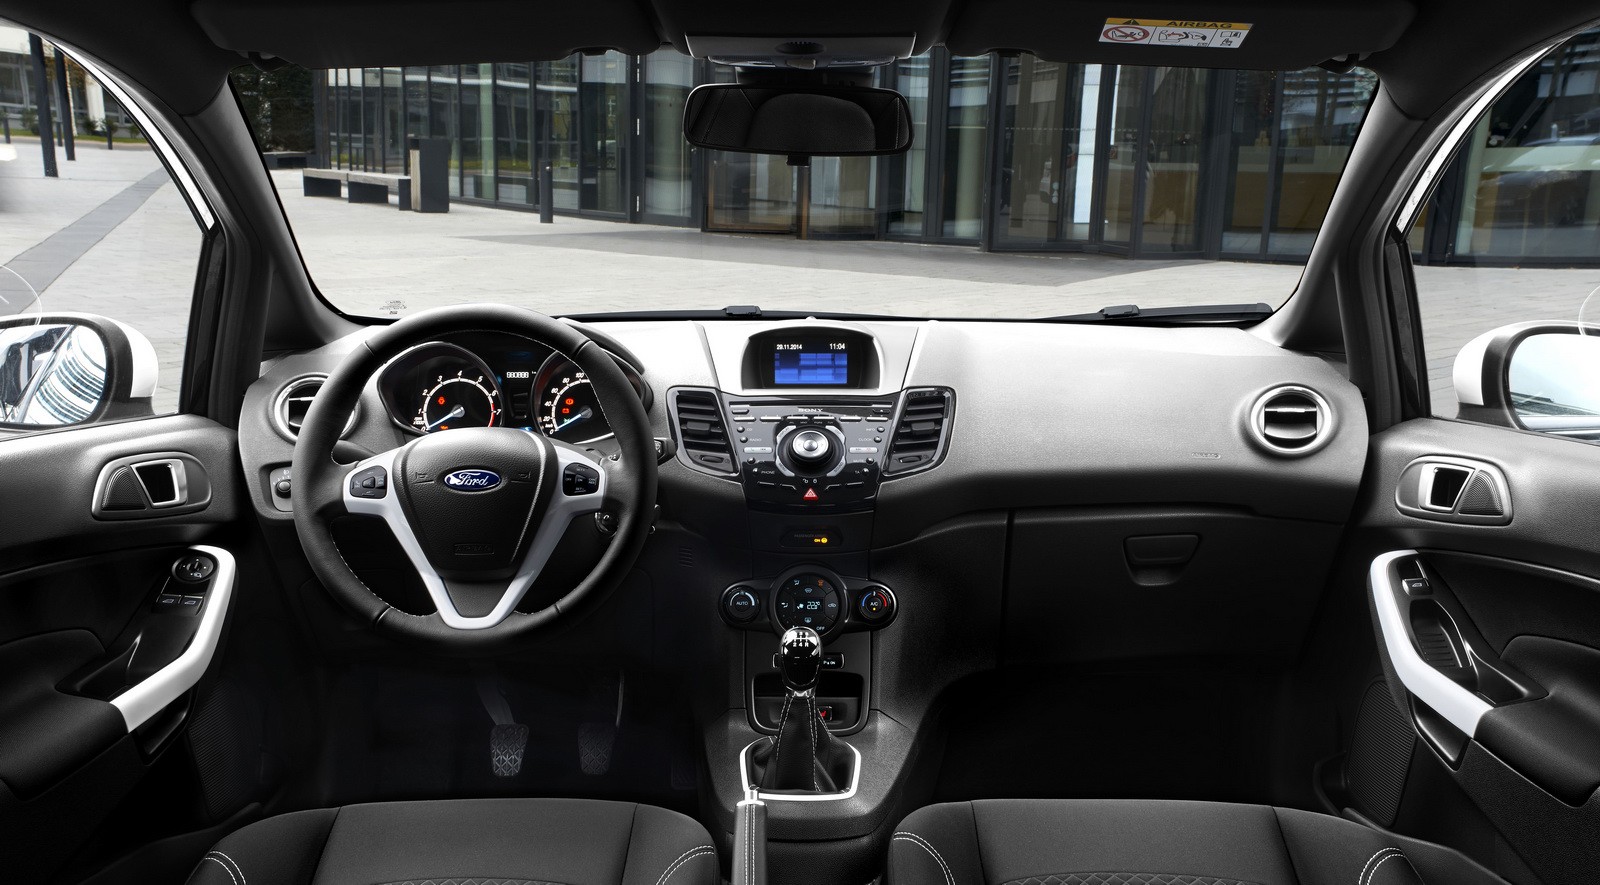 Ford Focus Hatchback 2012 Interior